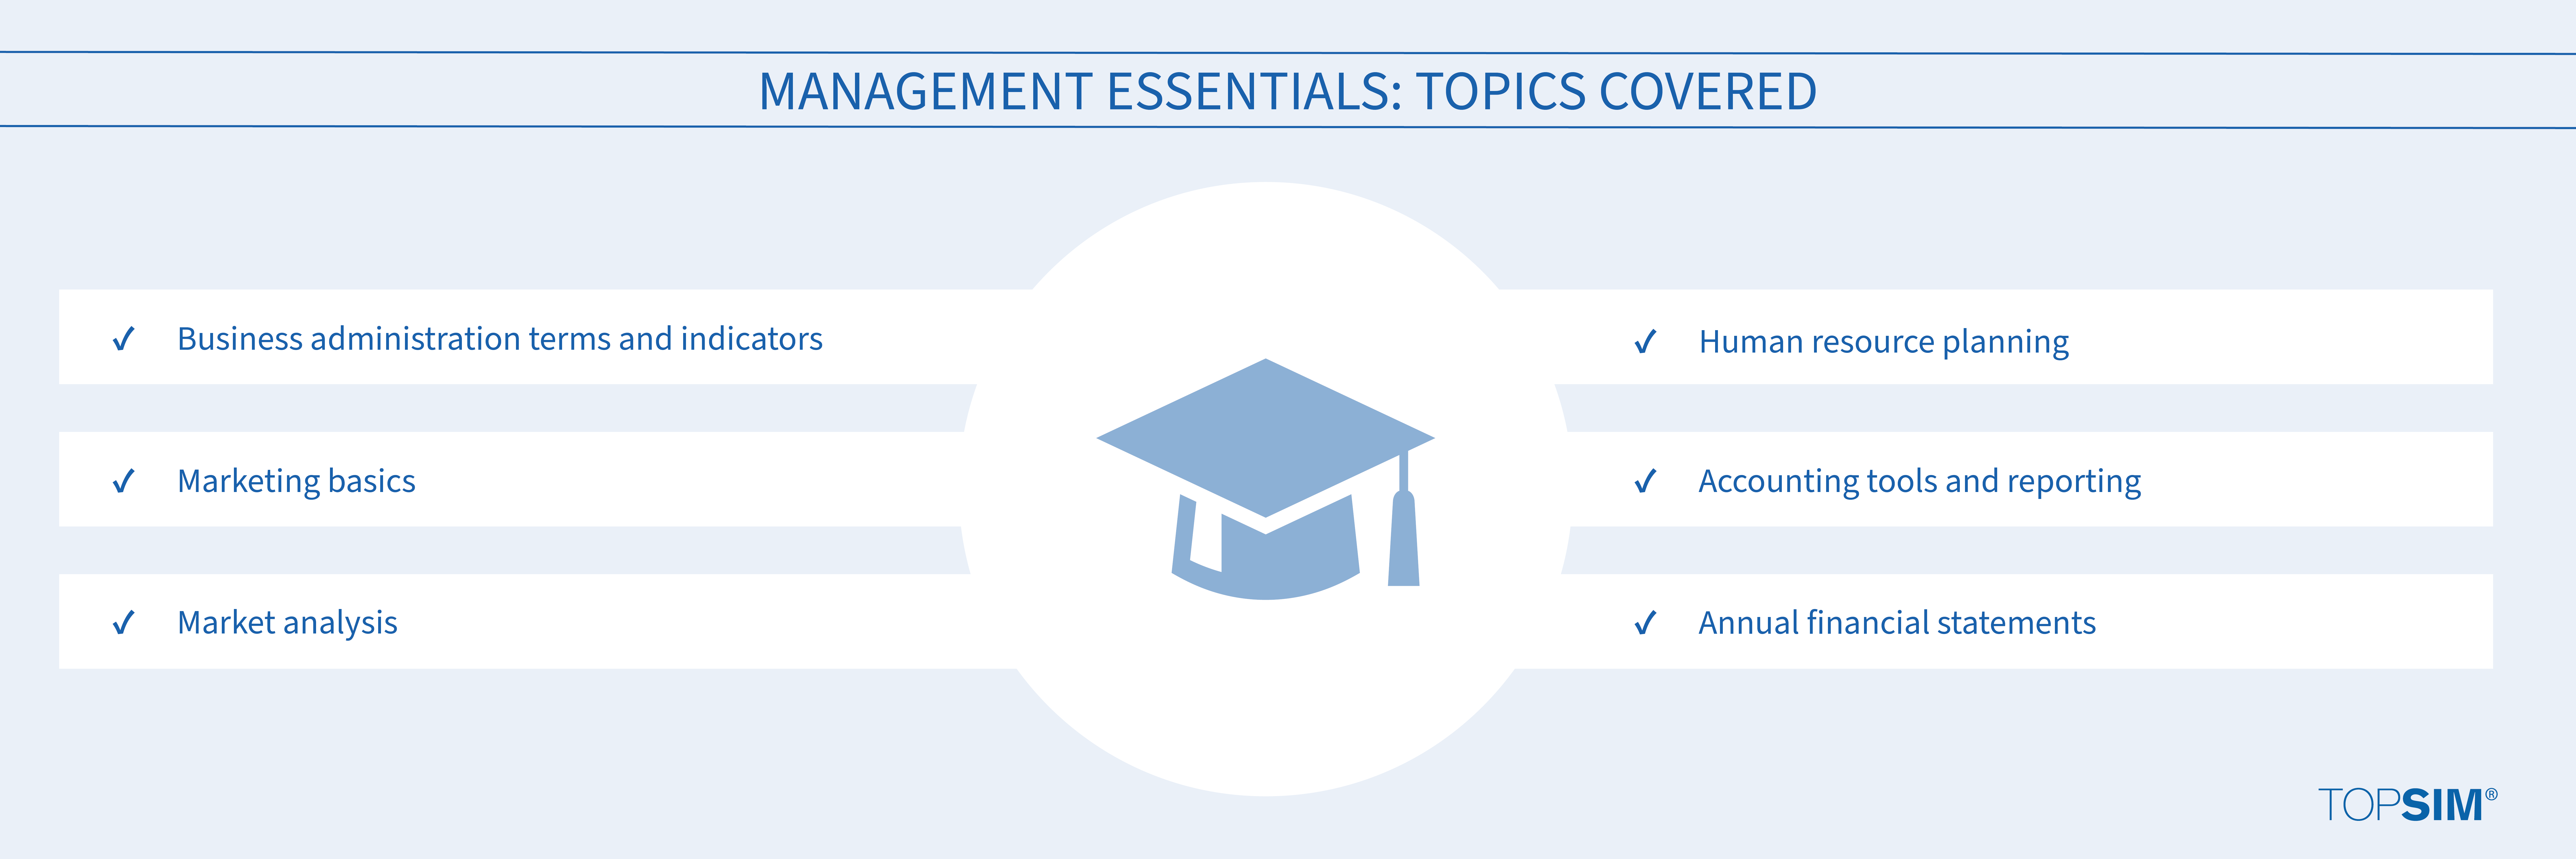 Topics covered: Management Essentials